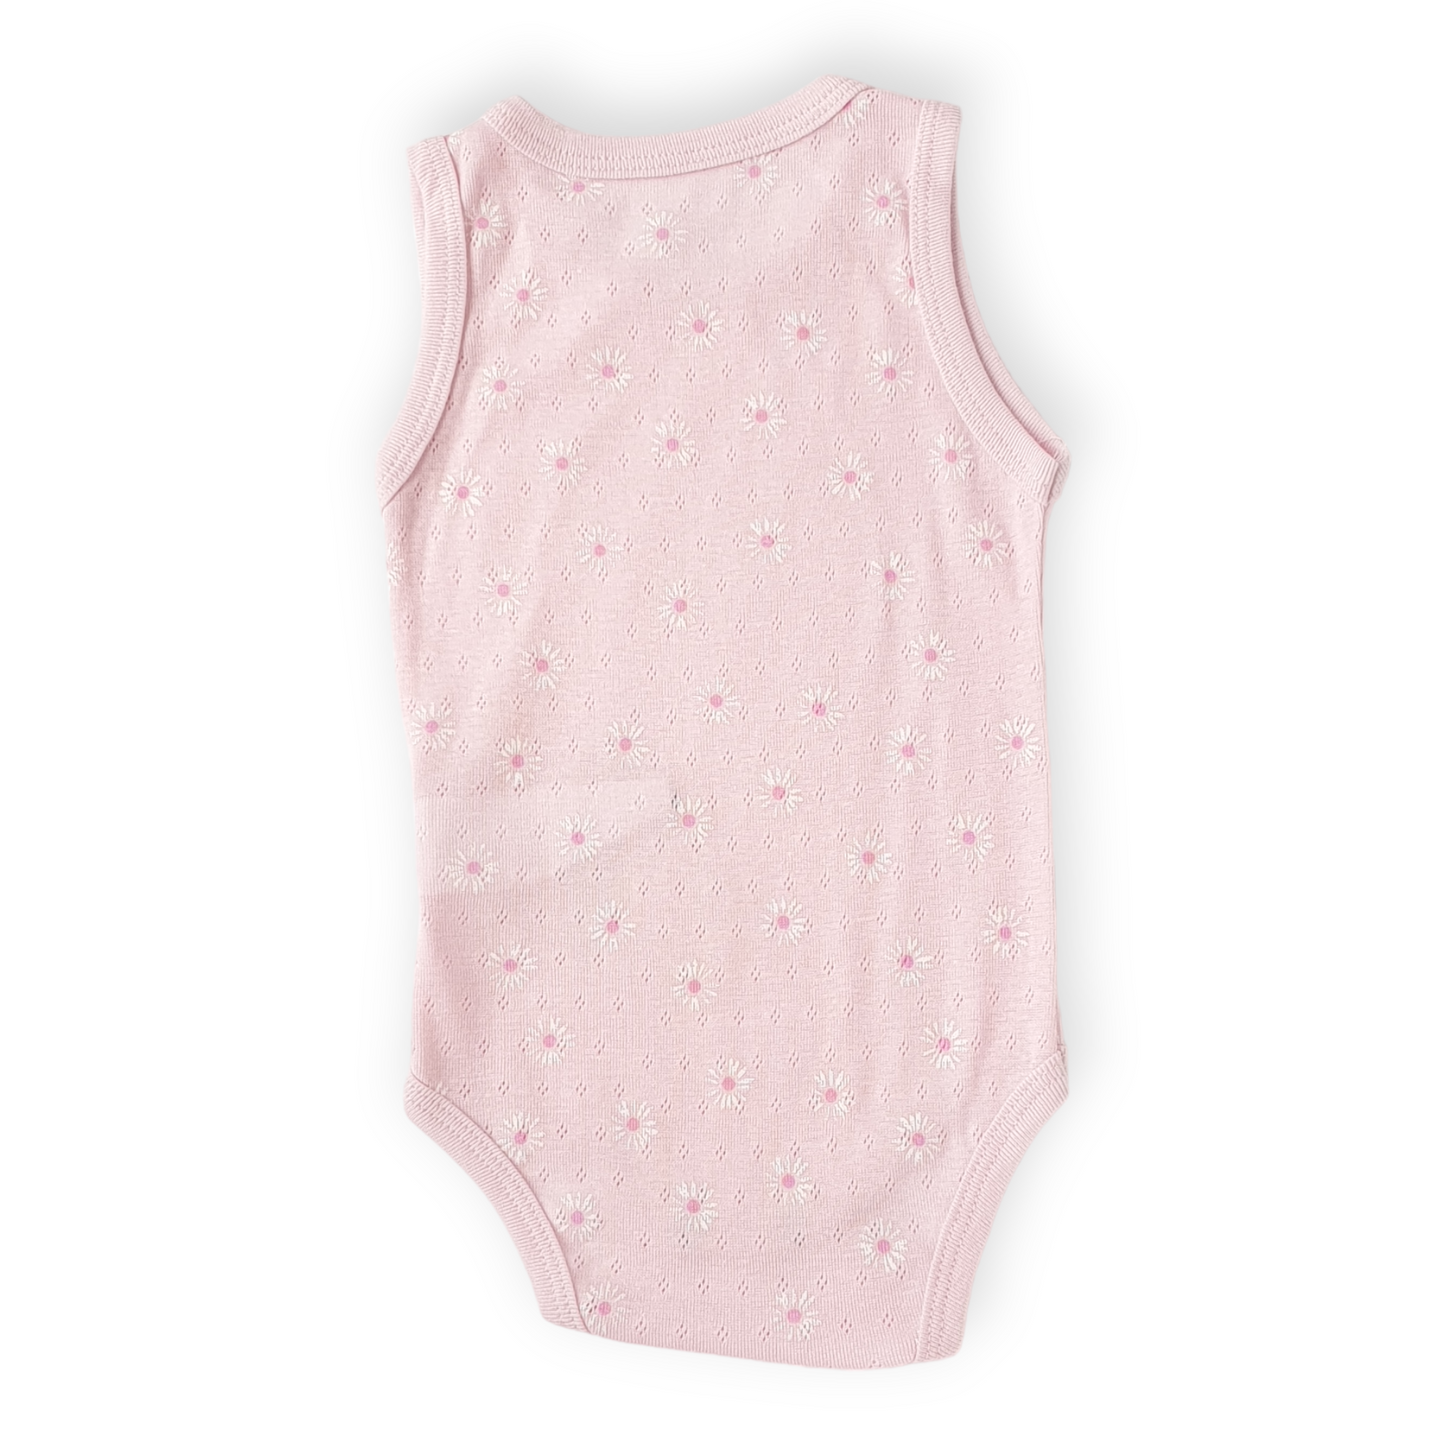 Basic Light Pink Sleeveless Body with Flowers-Body, Bodysuit, Catgirl, Creeper, Flowers, Girl, Light Pink, Onesie, Pink, Sleeveless, SS23-Veo-[Too Twee]-[Tootwee]-[baby]-[newborn]-[clothes]-[essentials]-[toys]-[Lebanon]